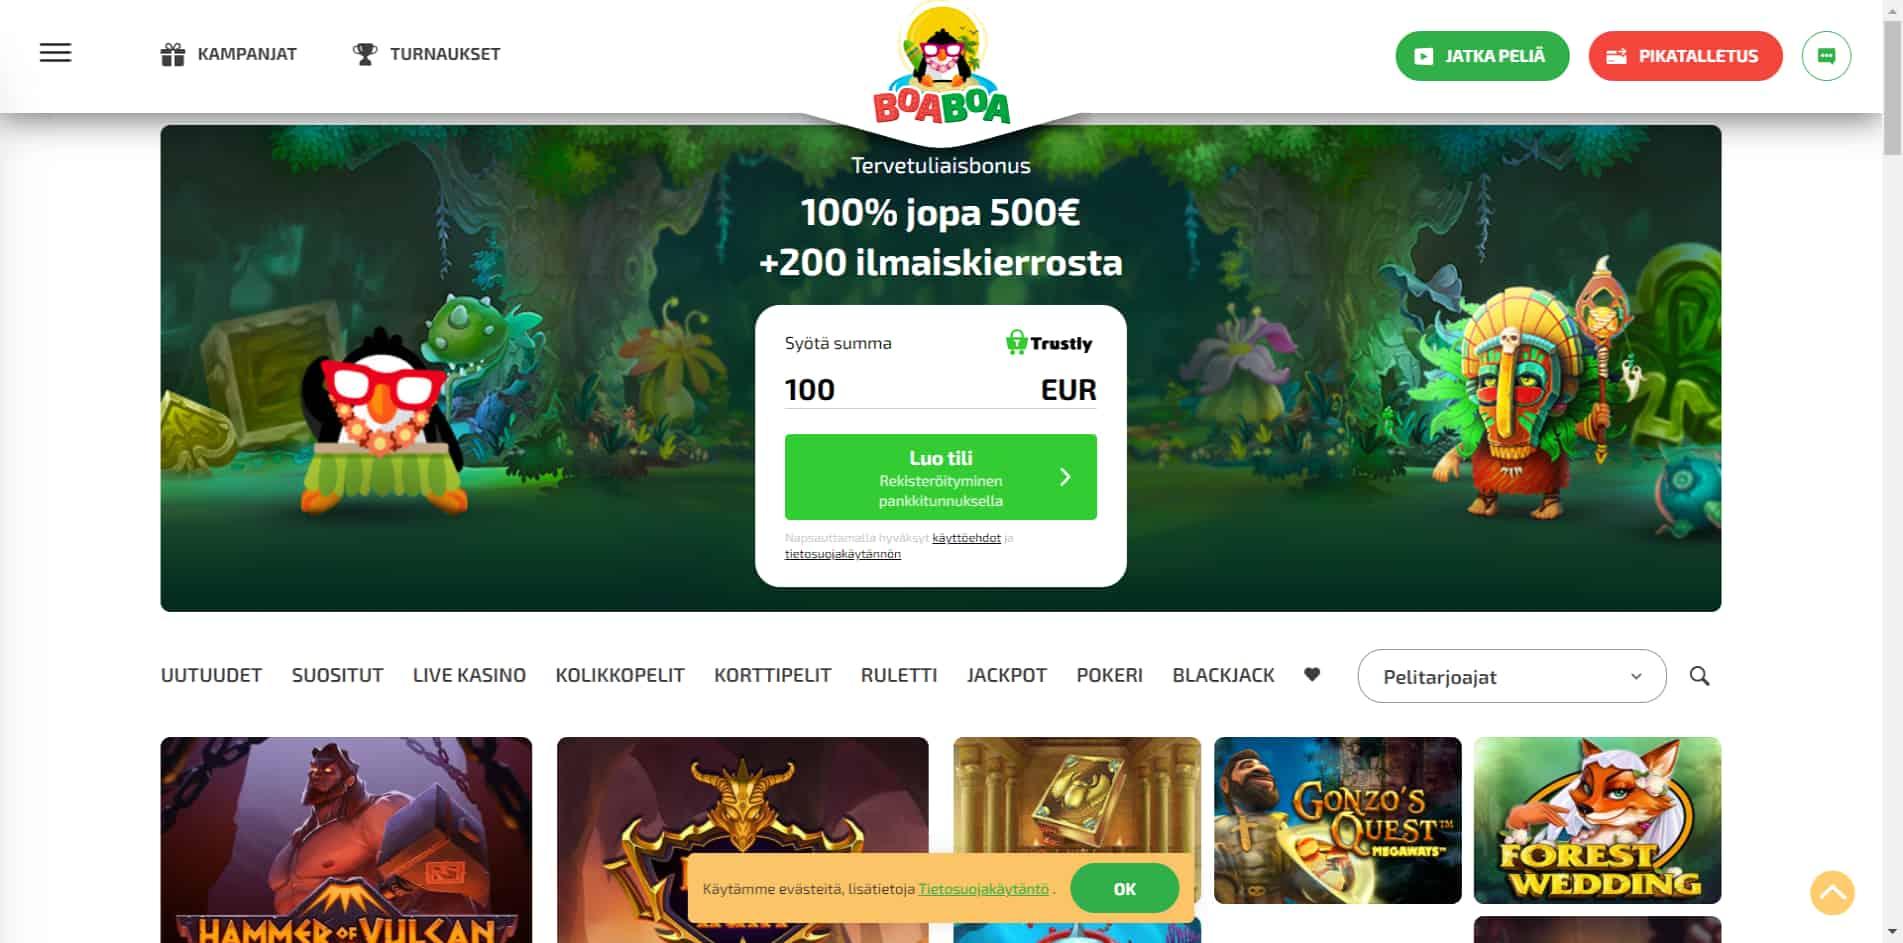 BoaBoa casino homepage